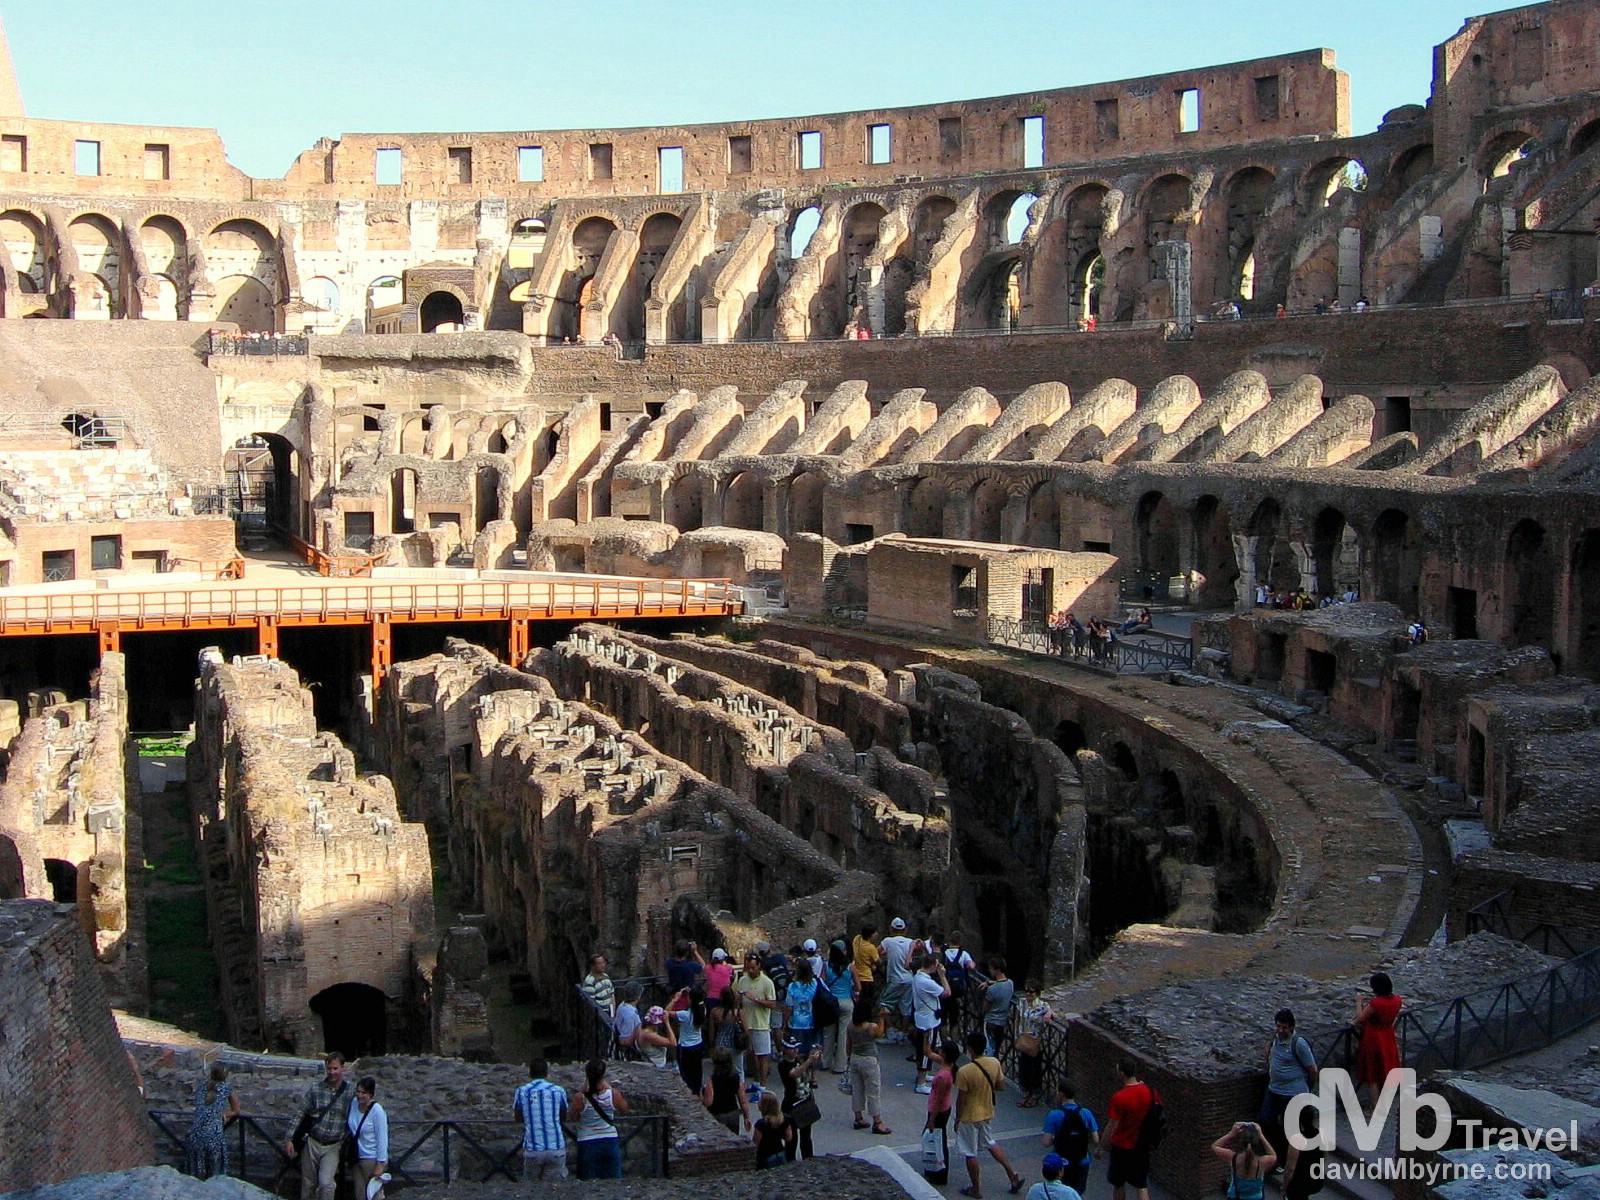 The inside of the Colosseum, Rome. September 2nd 2007.